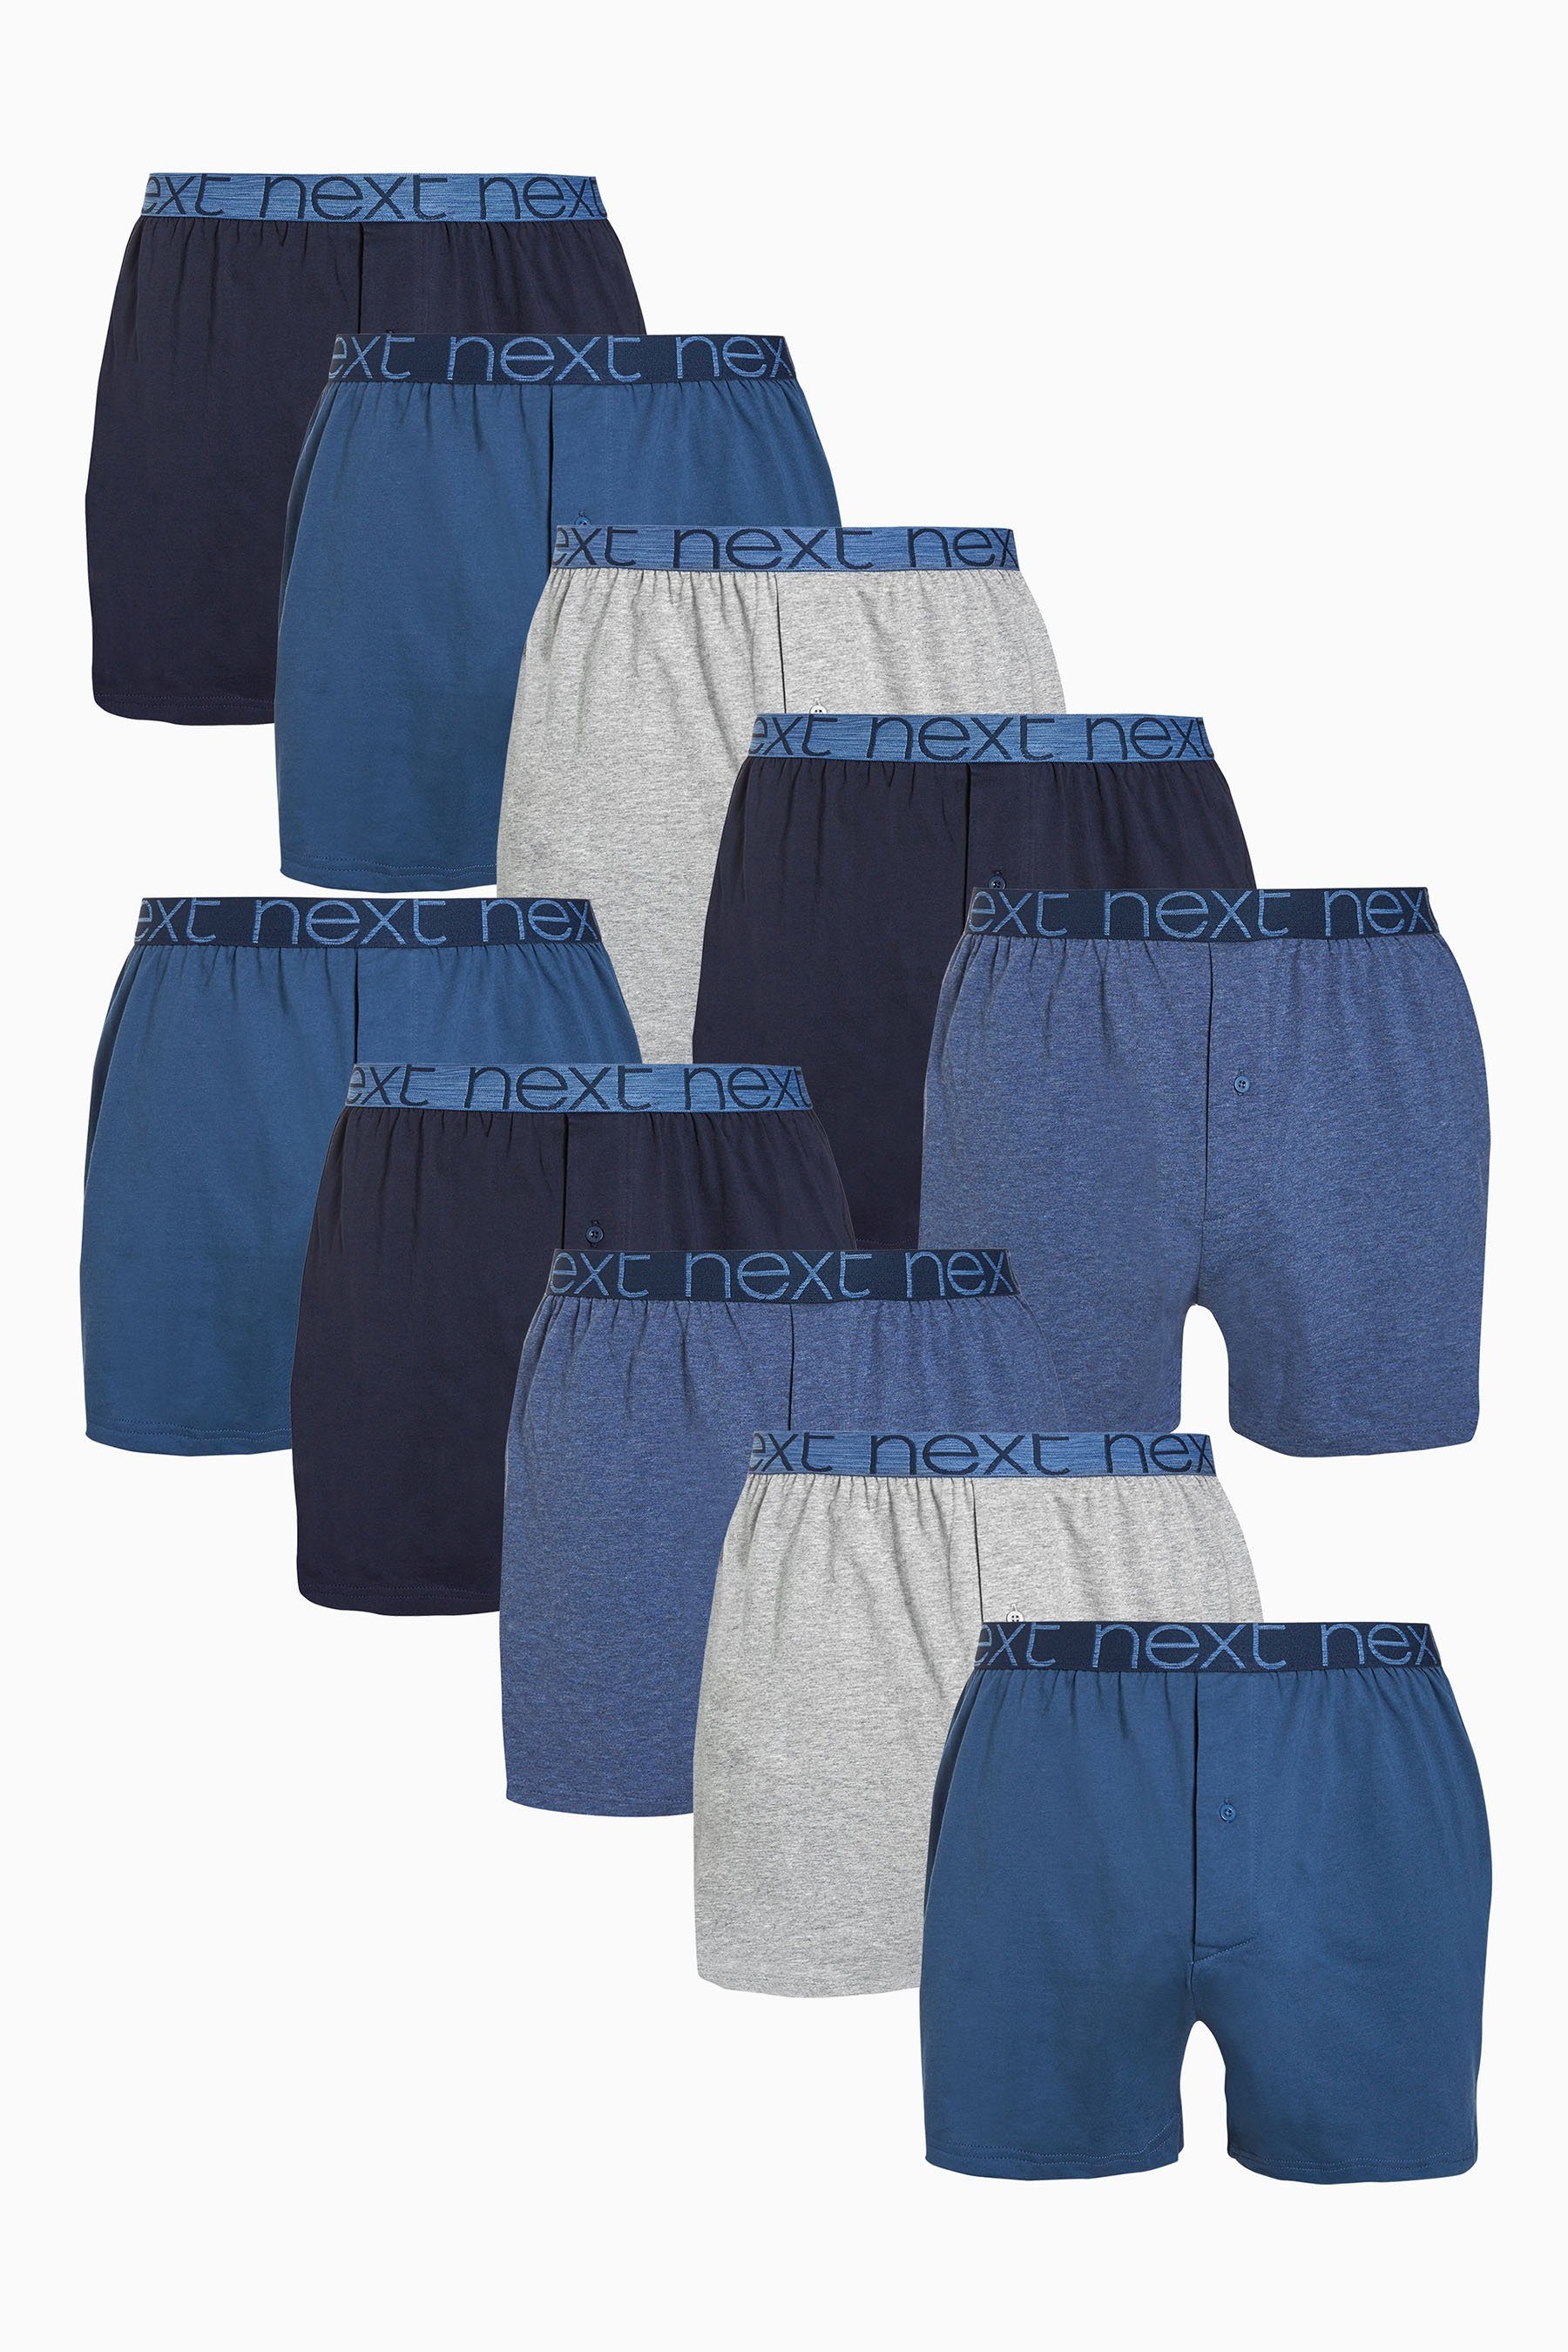 Next Boxershorts Loose Fit Boxershorts aus reiner Baumwolle, (10-St) Blue